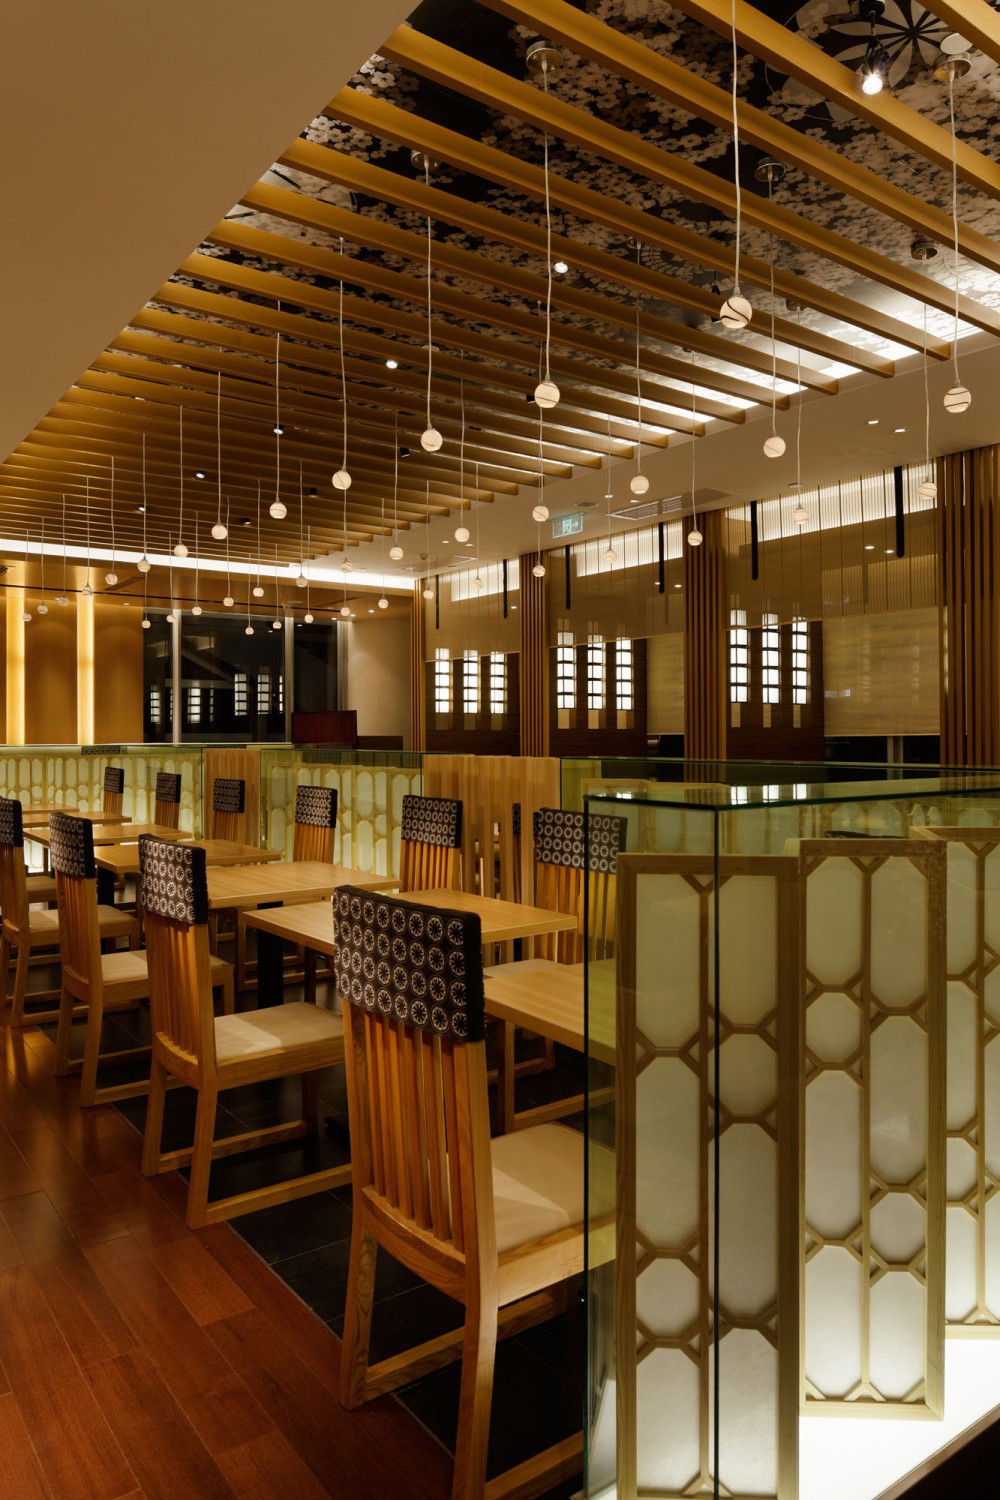 Saboten Beijing The 1st: Moderno restaurante japonés en China